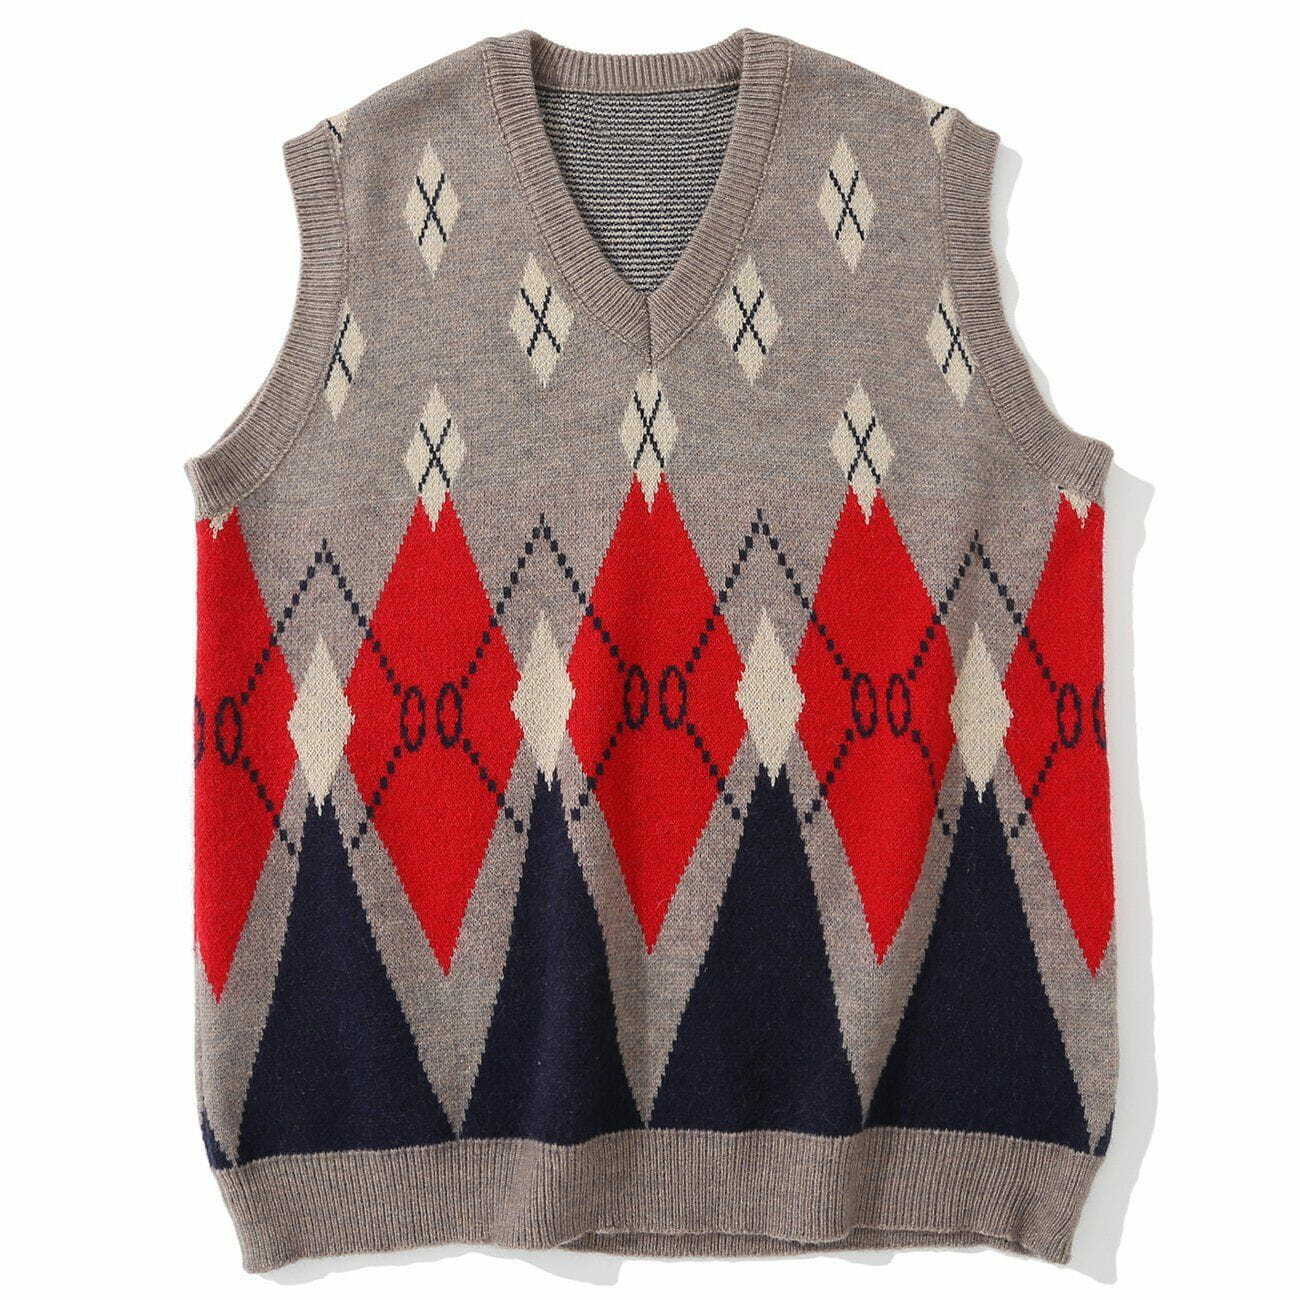 diamond knit sweater vest vintage chic statement 3792